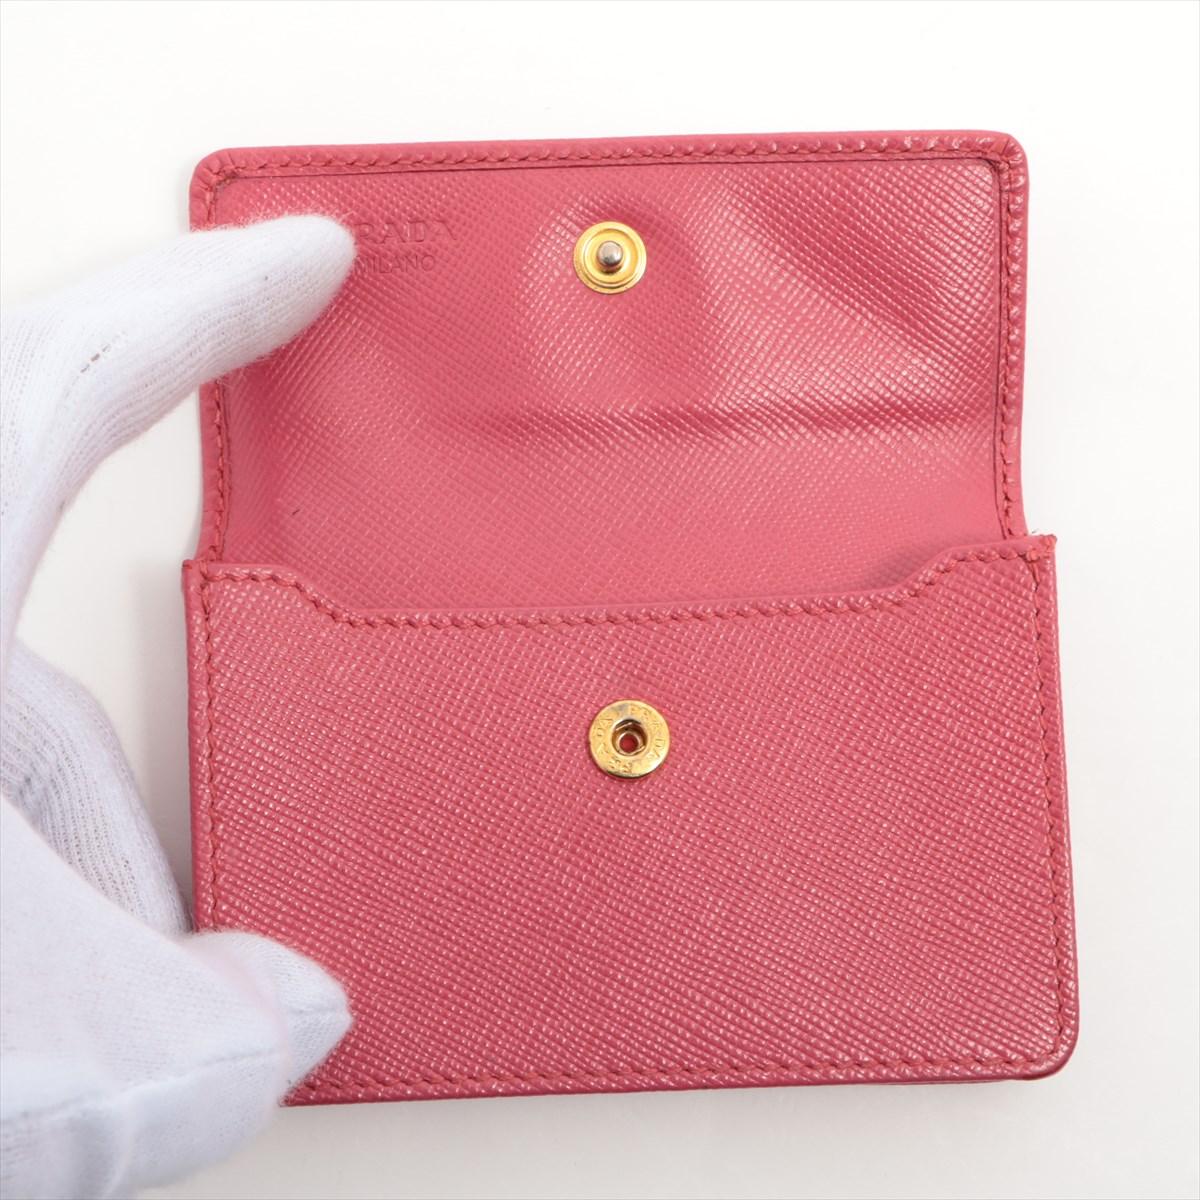 Women's Prada Saffiano Leather Card Case Pink For Sale